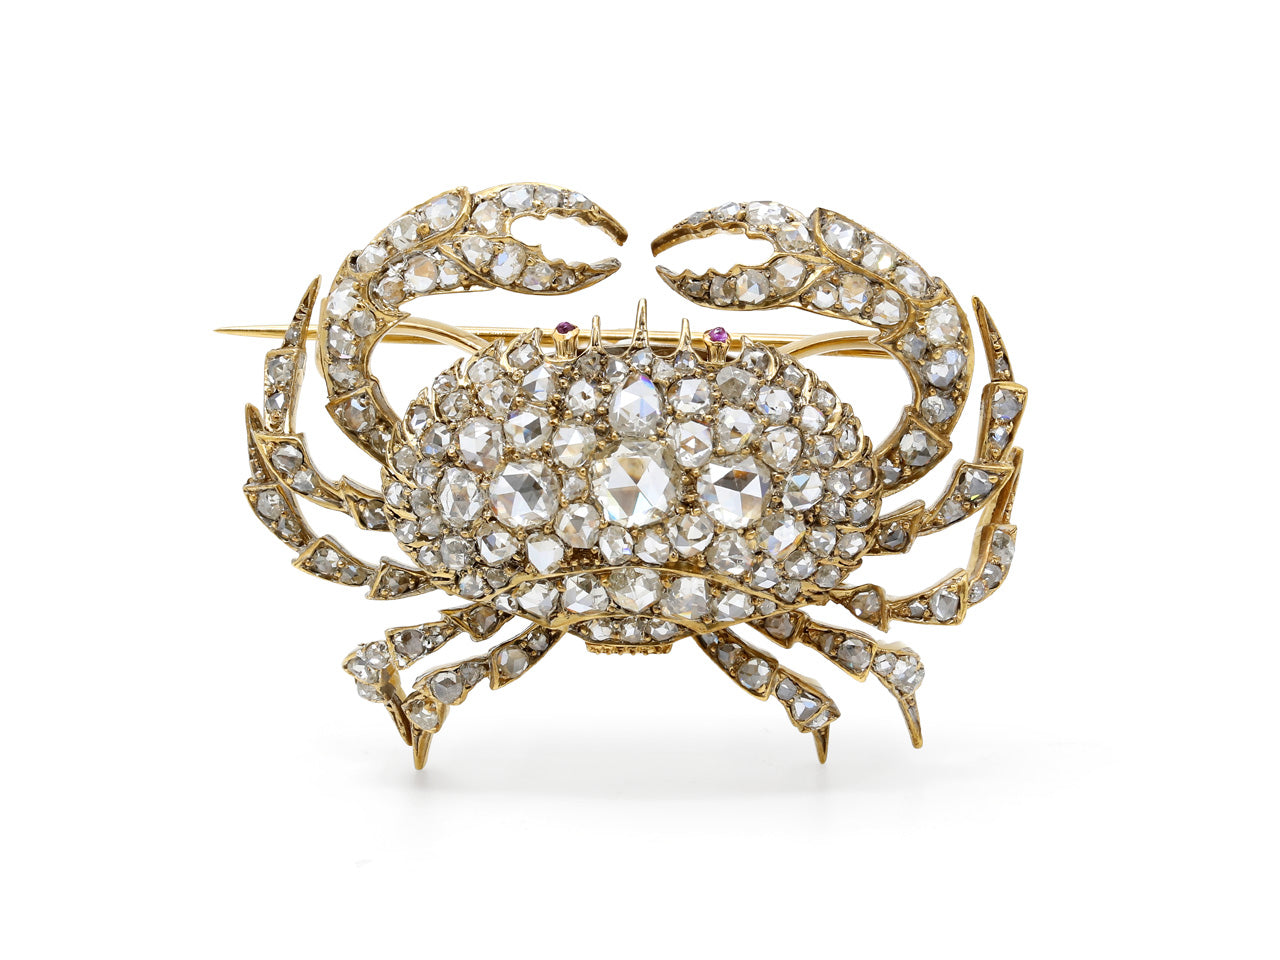 Antique Victorian Diamond Crab Brooch in 18K Gold